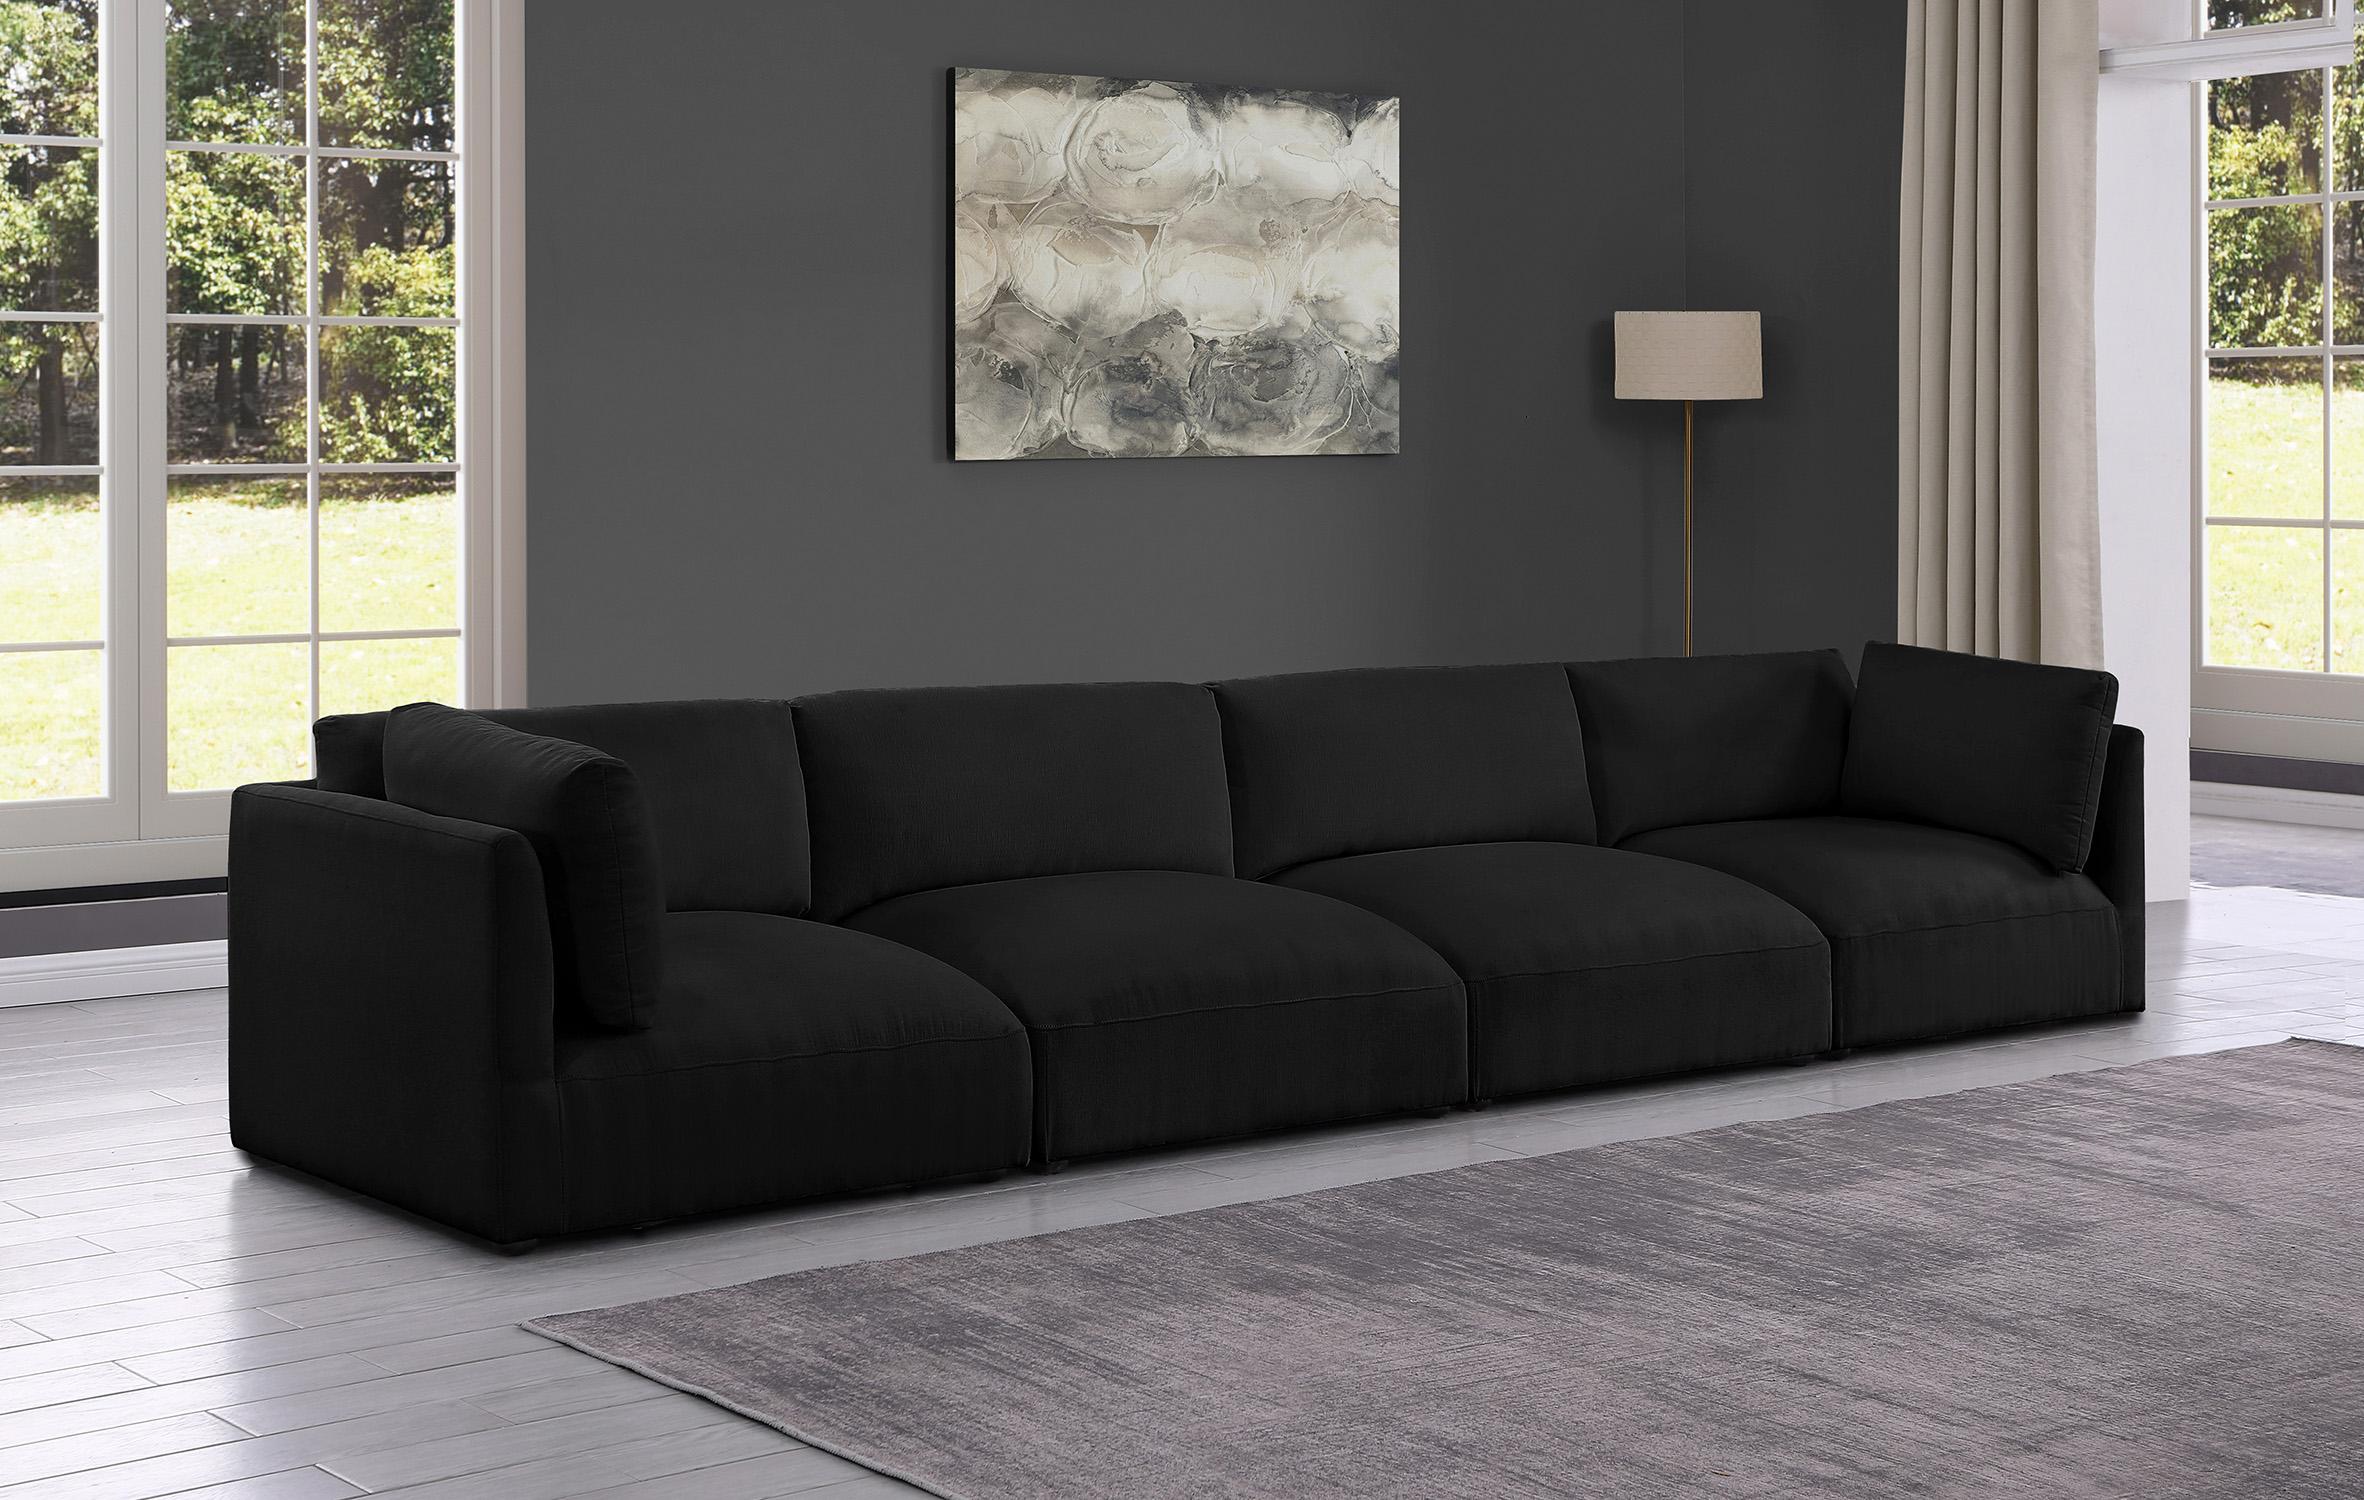 

    
Plush Black Fabric Modular Sofa EASE 696Black-S152B Meridian Modern Contemporary
